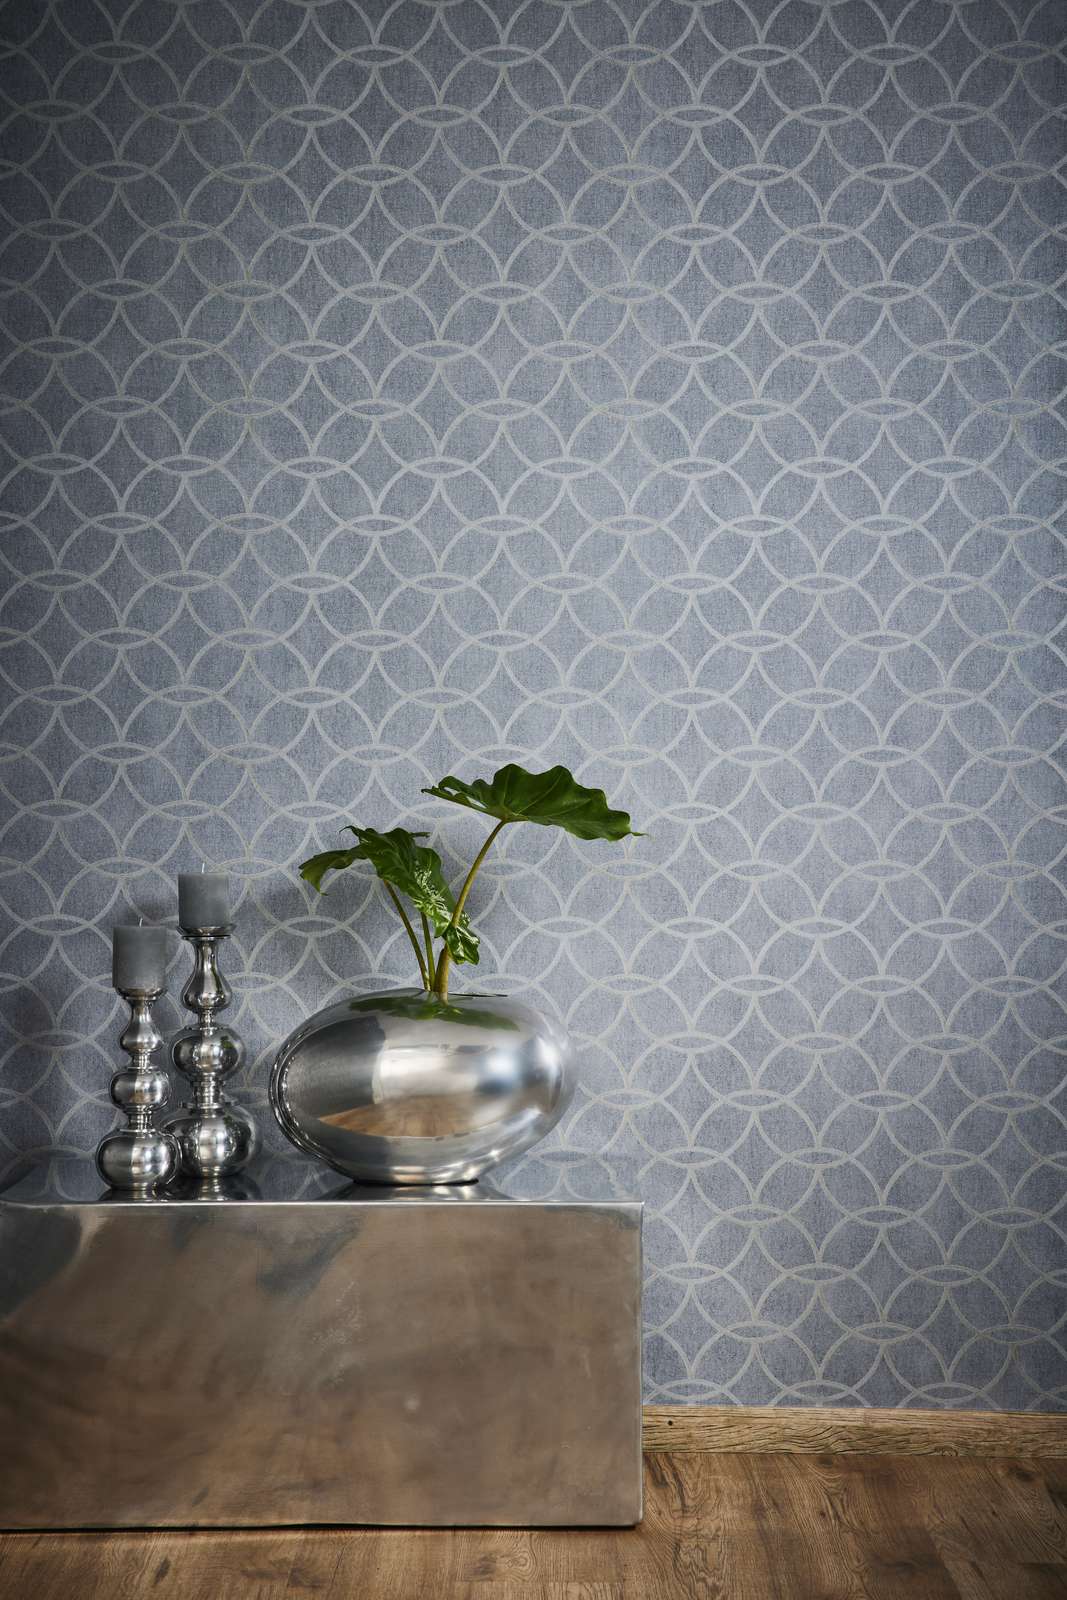             Grey pattern wallpaper with silver metallic pattern & shimmer effect - grey, metallic
        